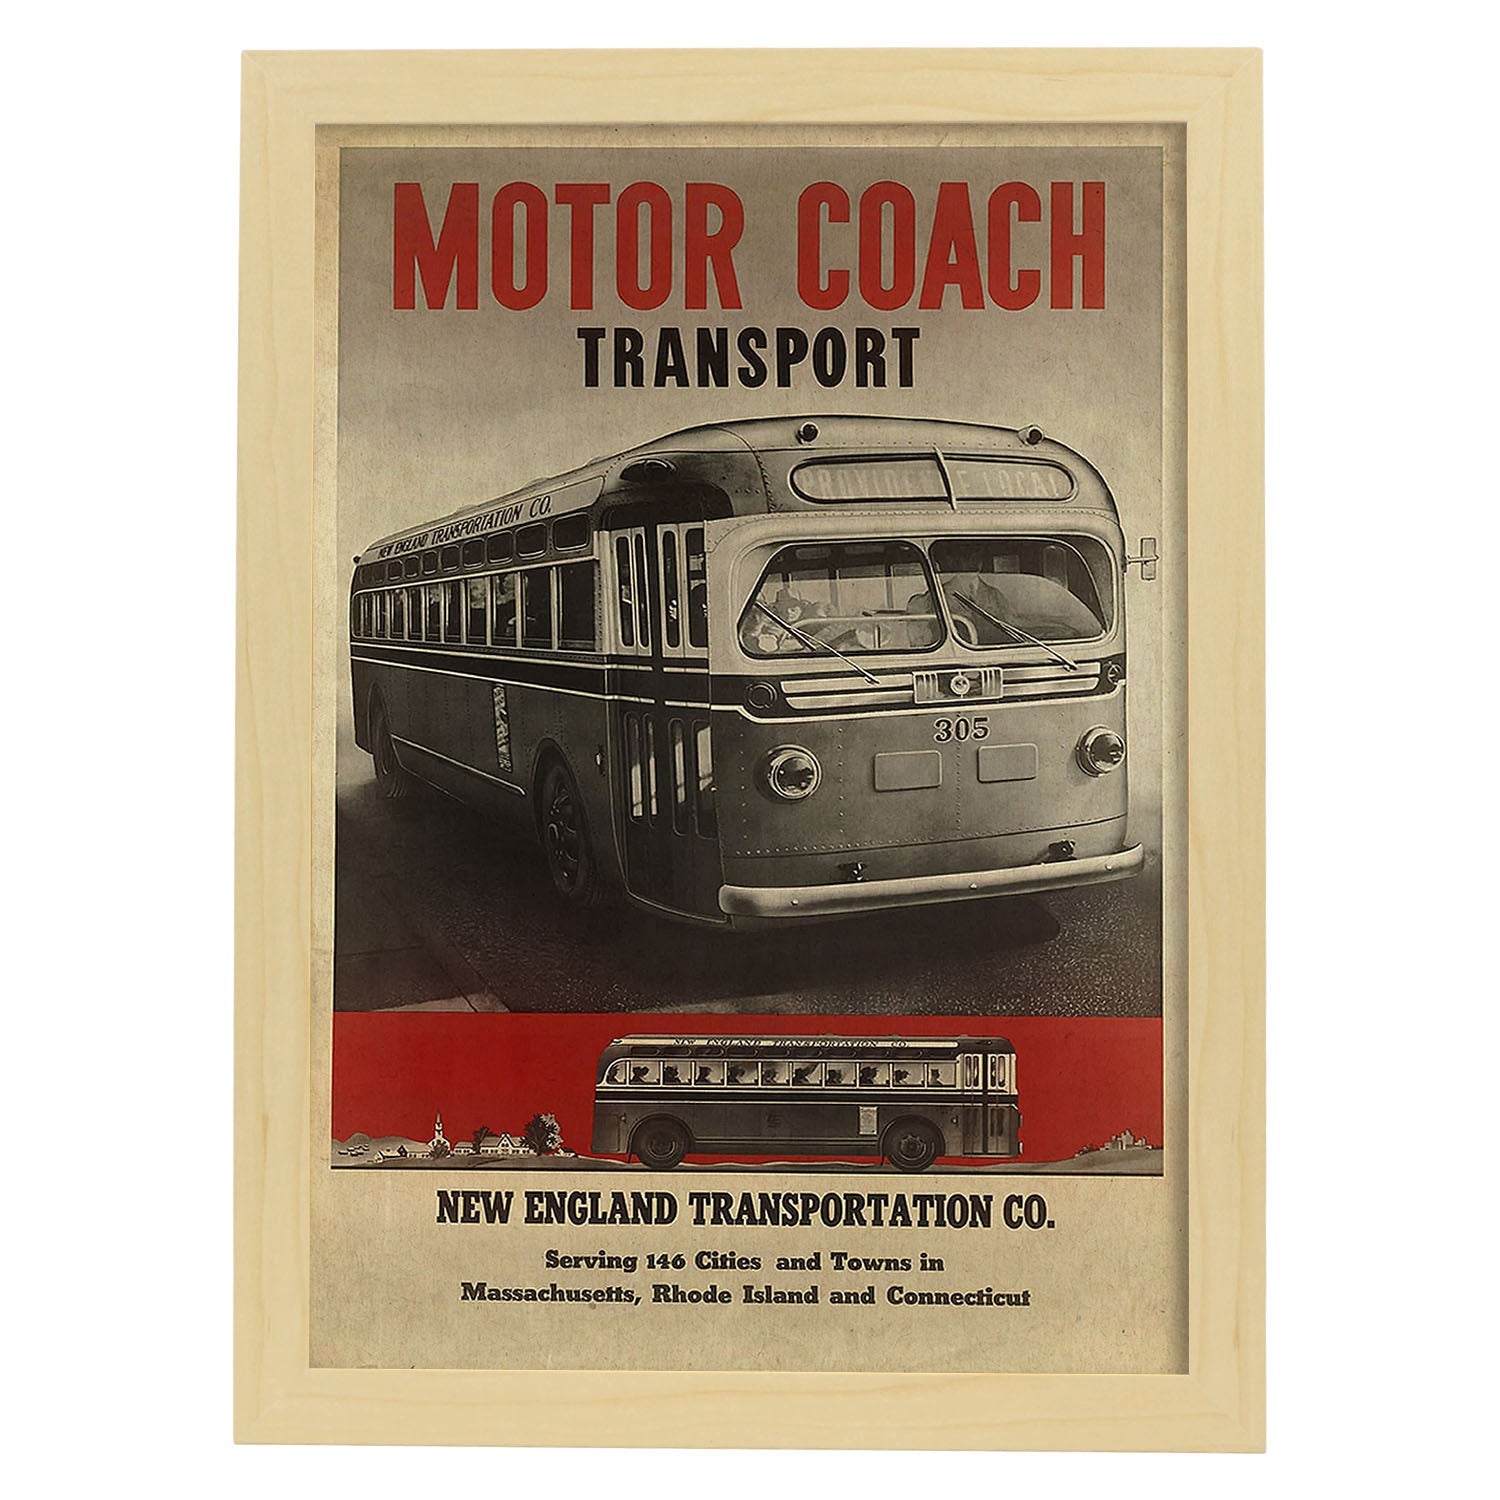 Poster vintage. Cartel vintage Motor Coach Transport de 1940.-Artwork-Nacnic-A3-Marco Madera clara-Nacnic Estudio SL